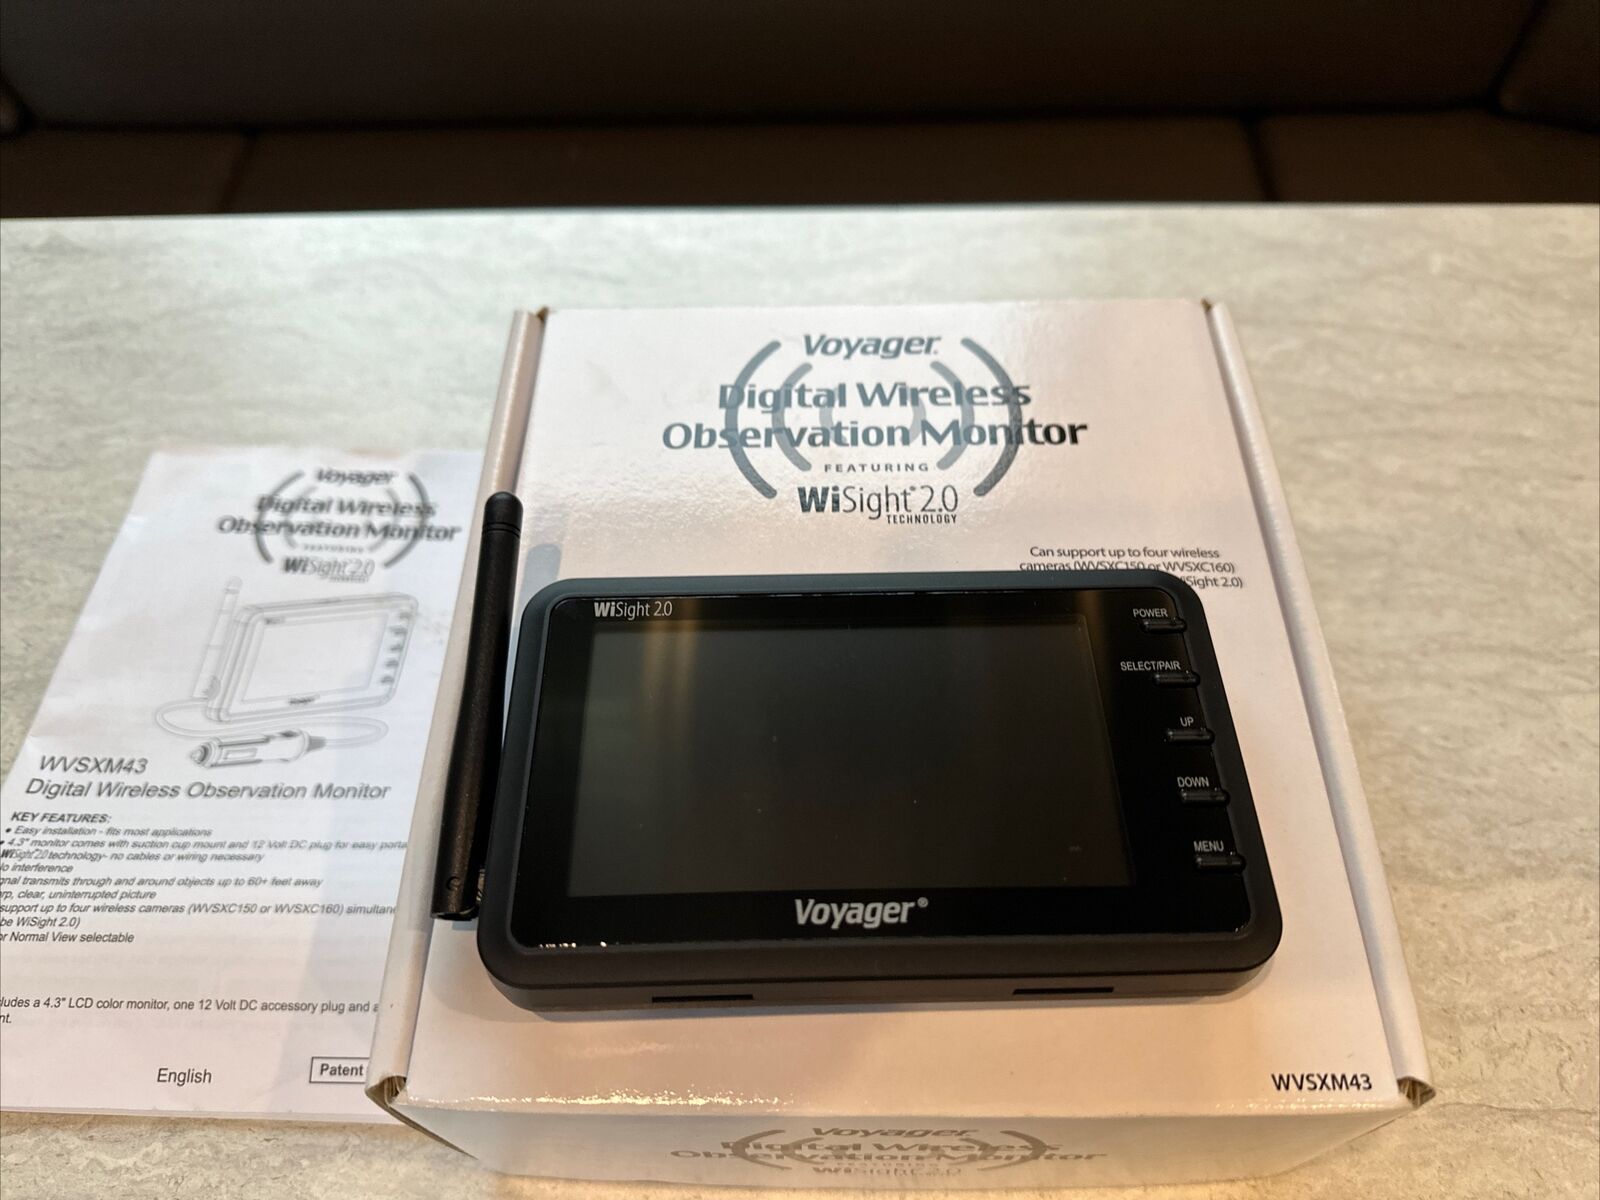 Voyager WVSXM43 Digital Wireless Observation Monitor, WiSight 2.0 Technology